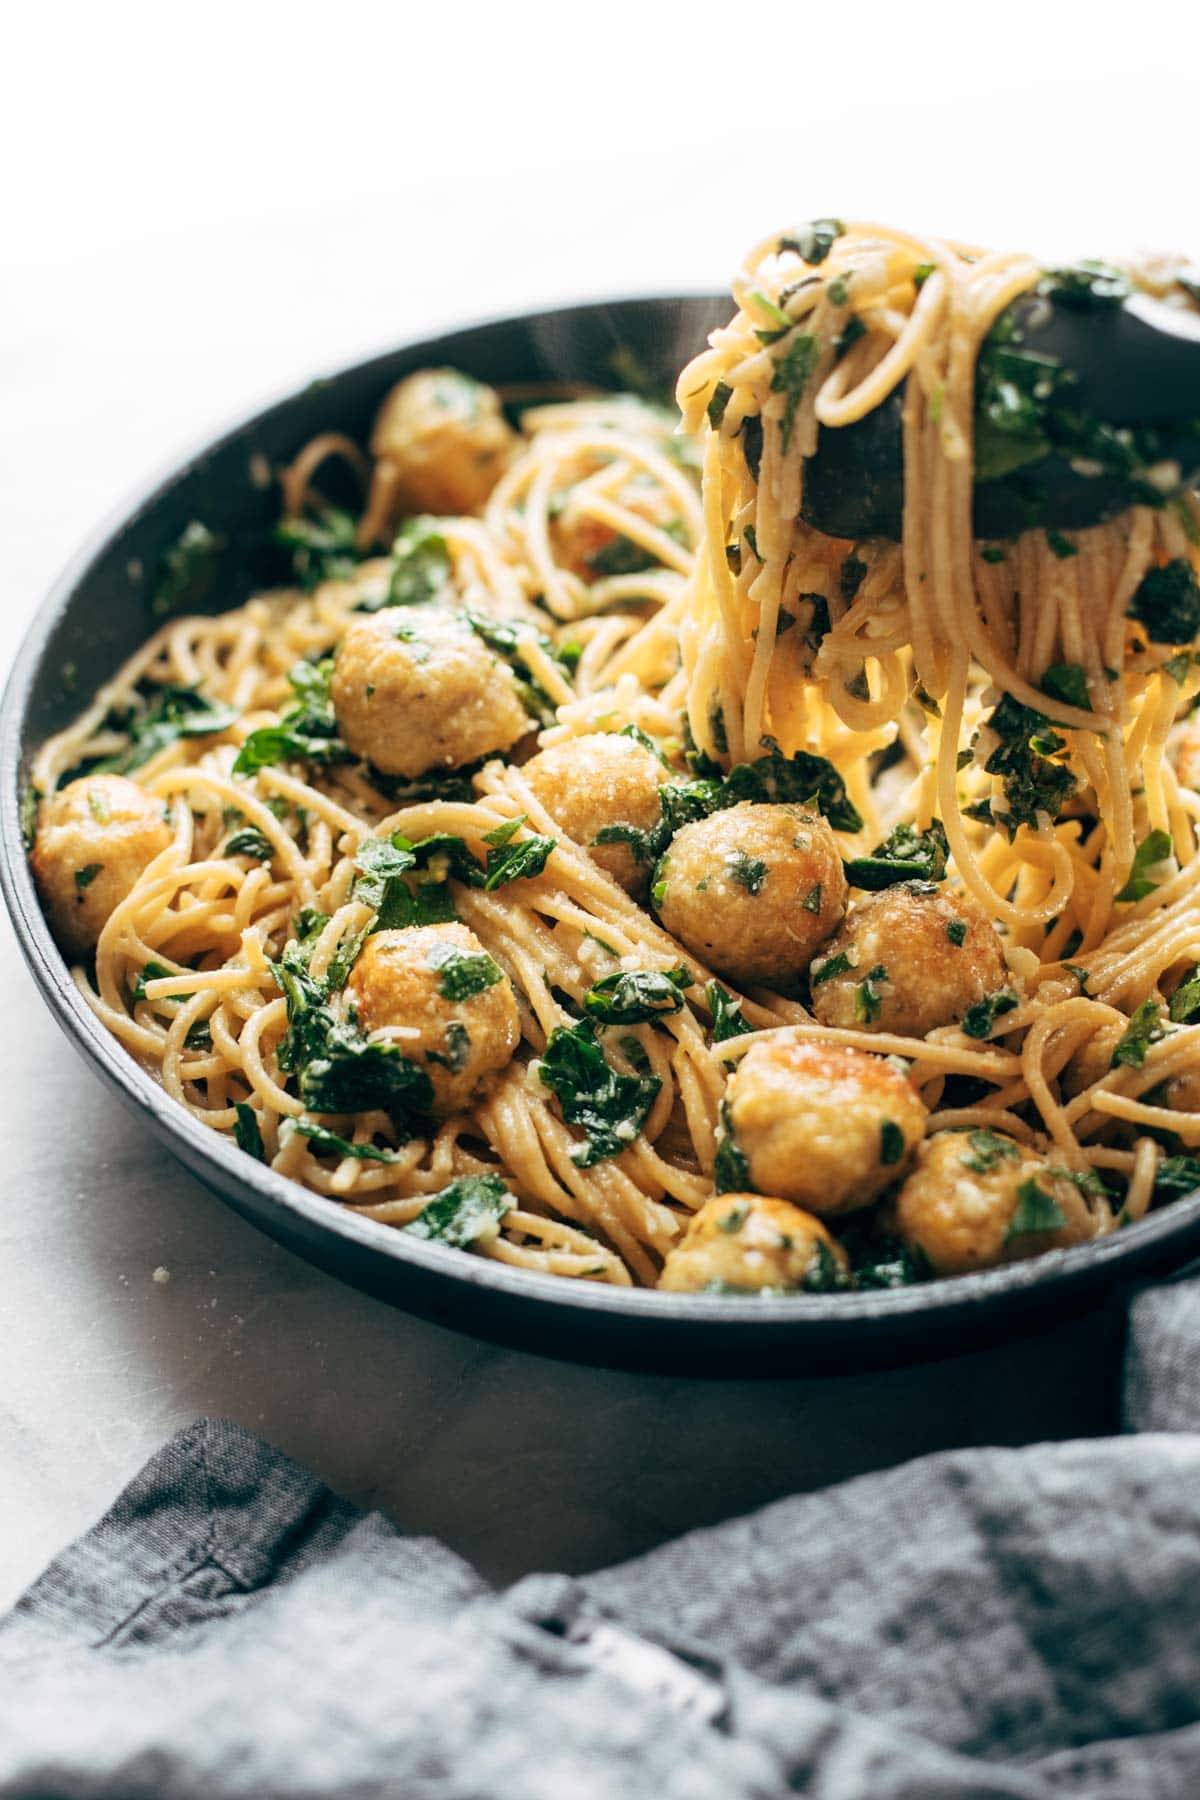 Garlic Herb Spaghetti with Chicken Meatballs